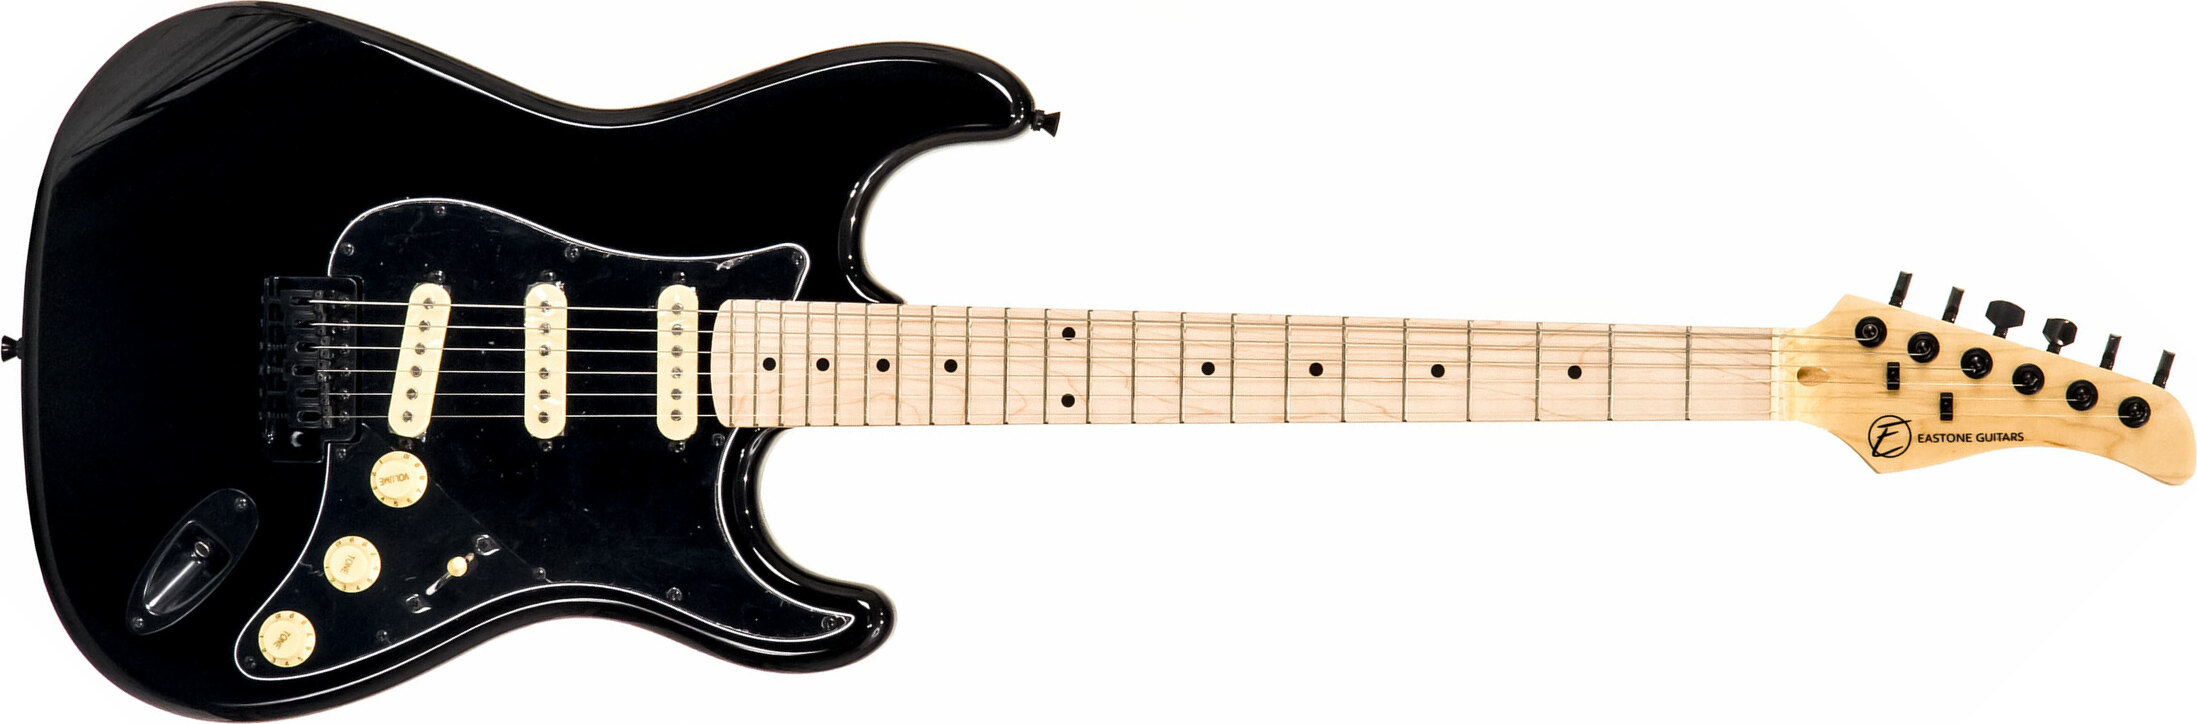 Eastone Str70 Gil Sss Trem Mn - Black - Str shape electric guitar - Main picture